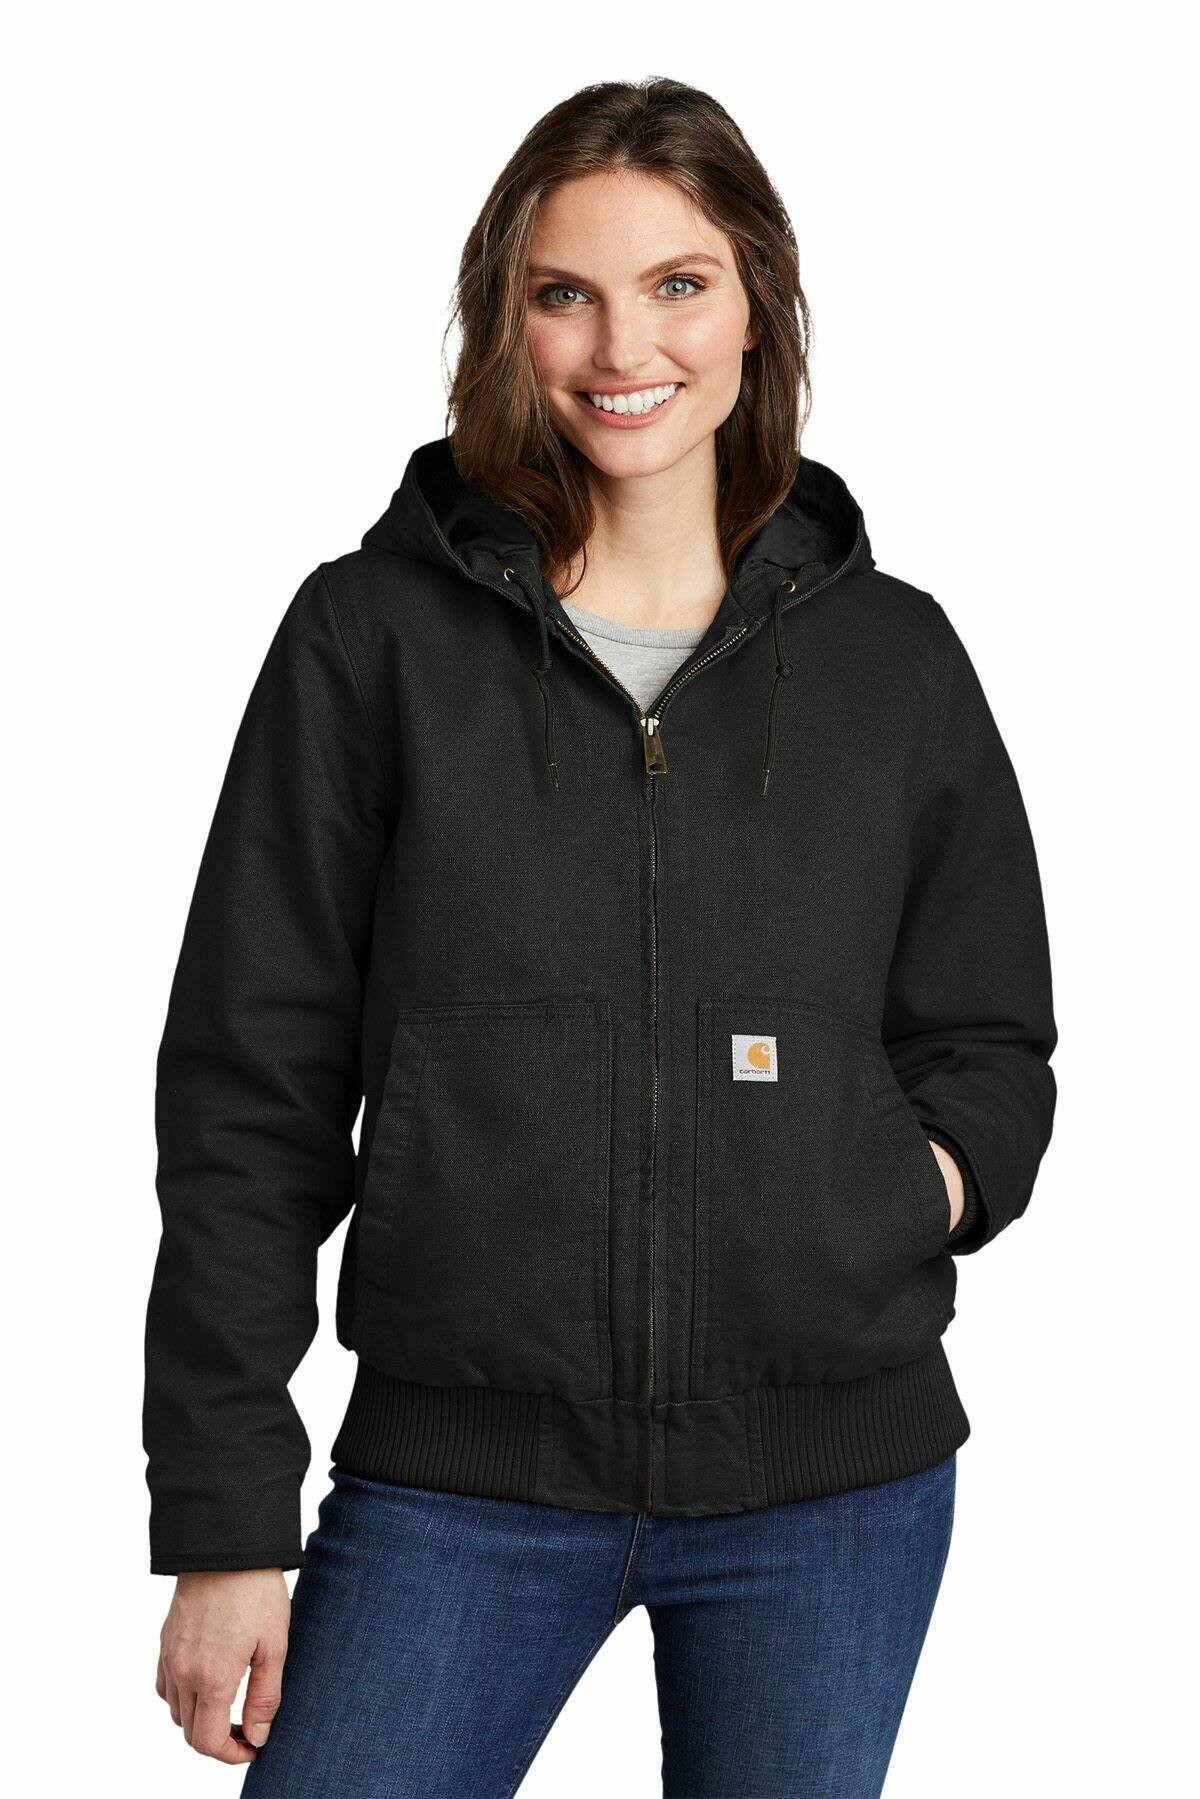 Carhartt Women's Black Washed Cotton Duck Sherpa Lined Jacket